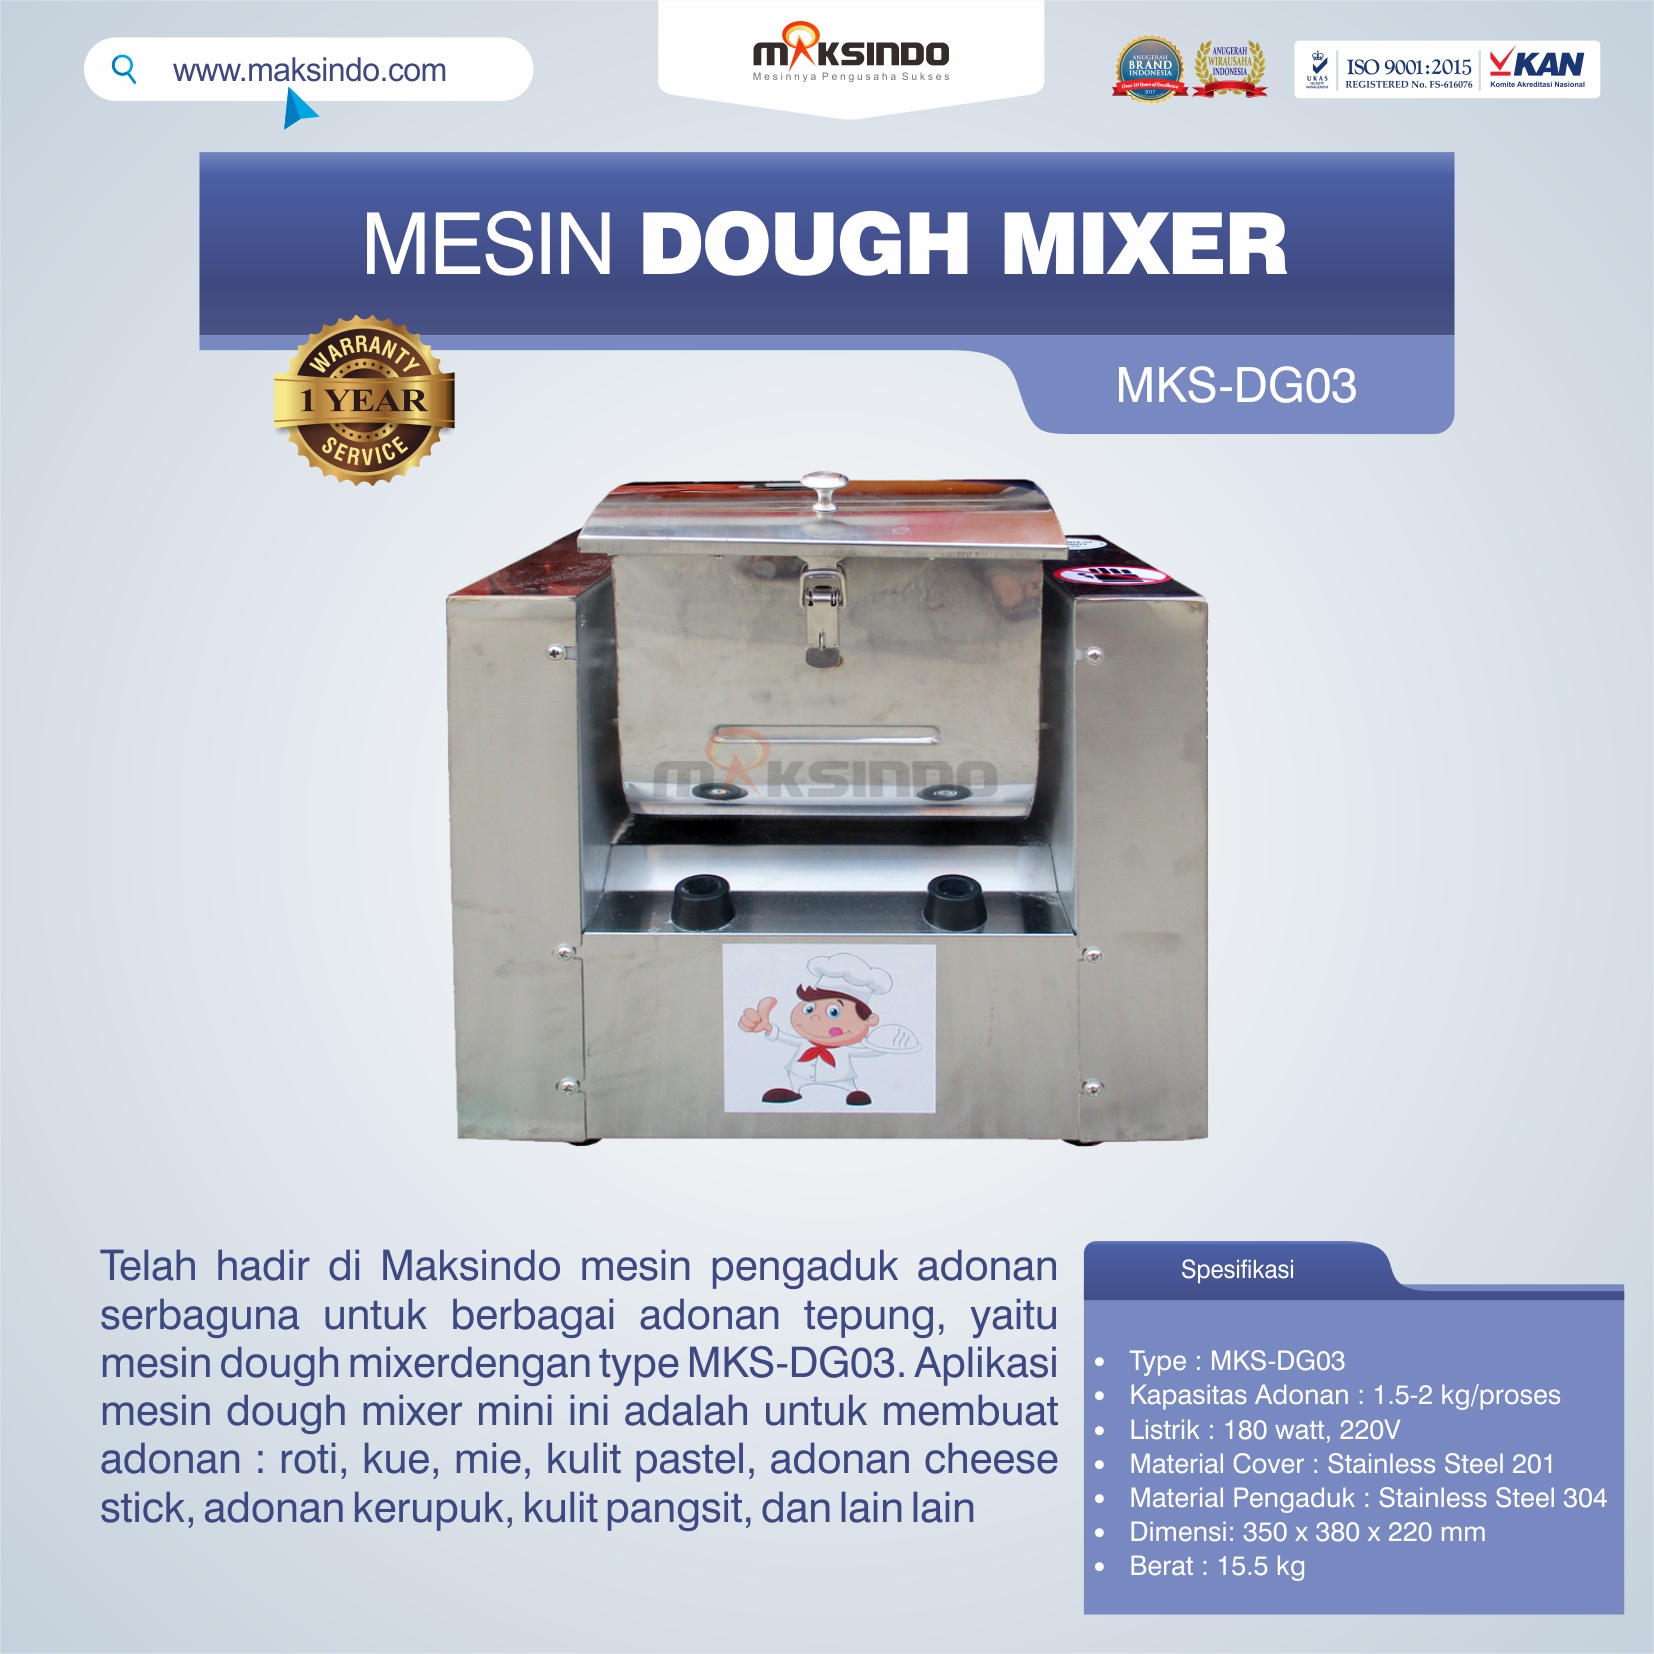 Jual Mesin Dough Mixer MKS-DG03 di Solo